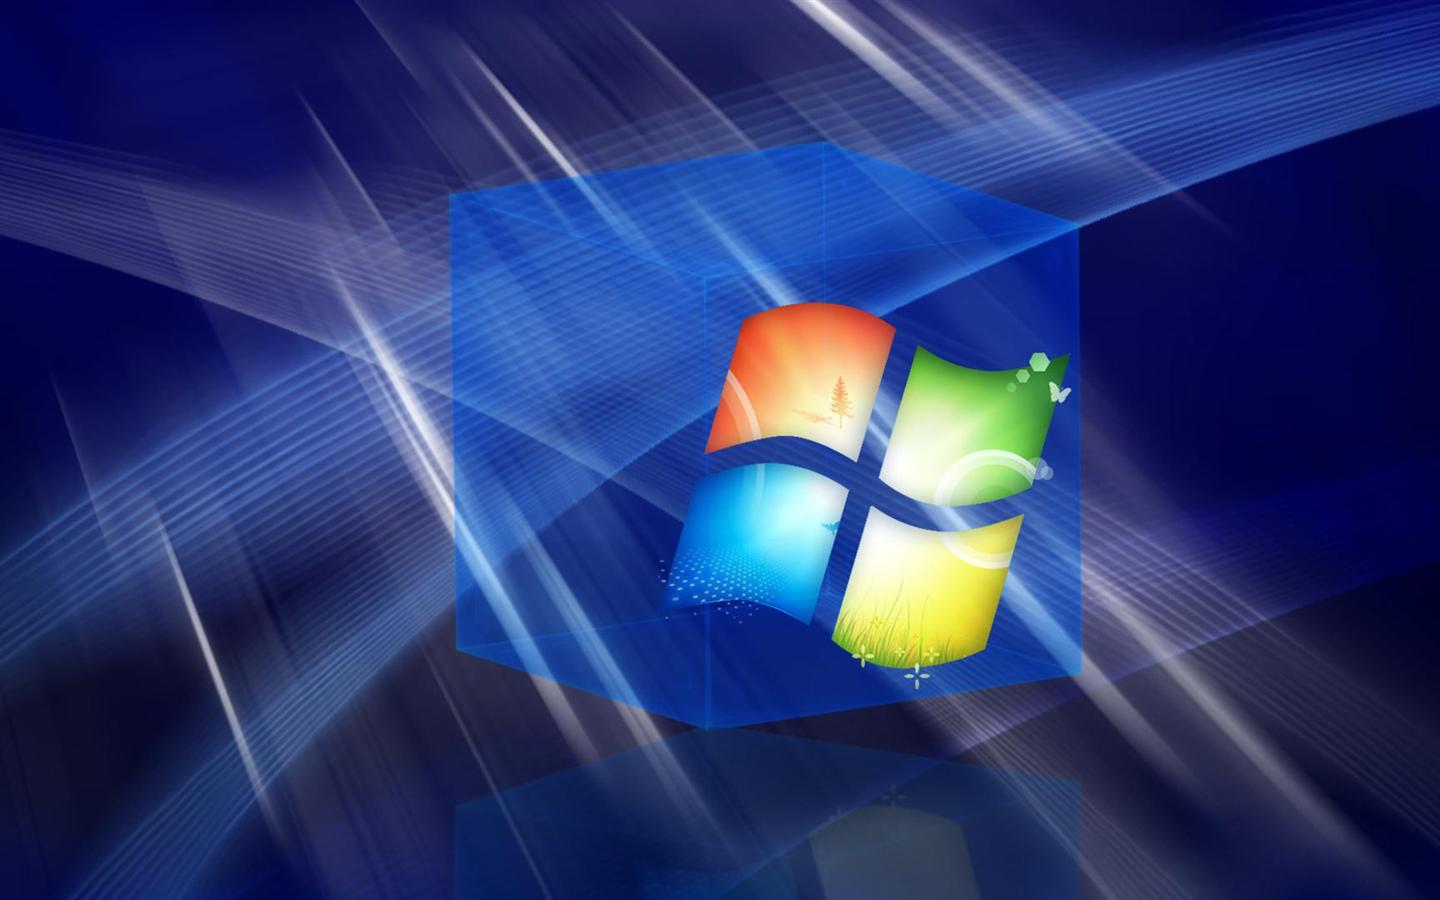 HD 3d Blue Windows Cube Desktop Background Wide Wallpaper